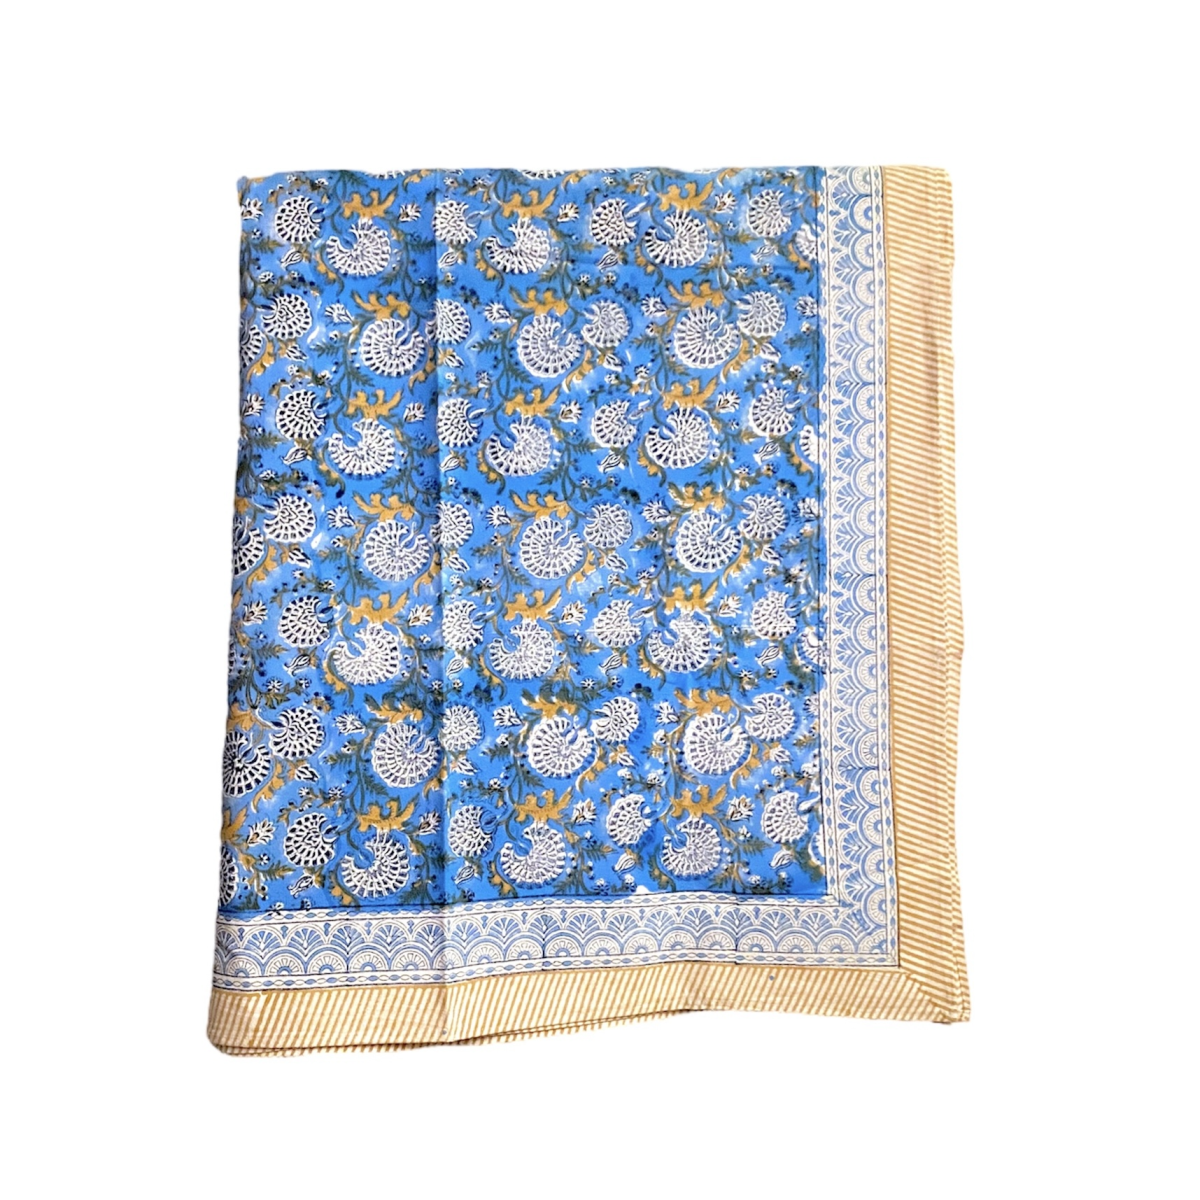 Block Printed Cotton Table Linen (270cm x 180cm) -  Blue Grotto